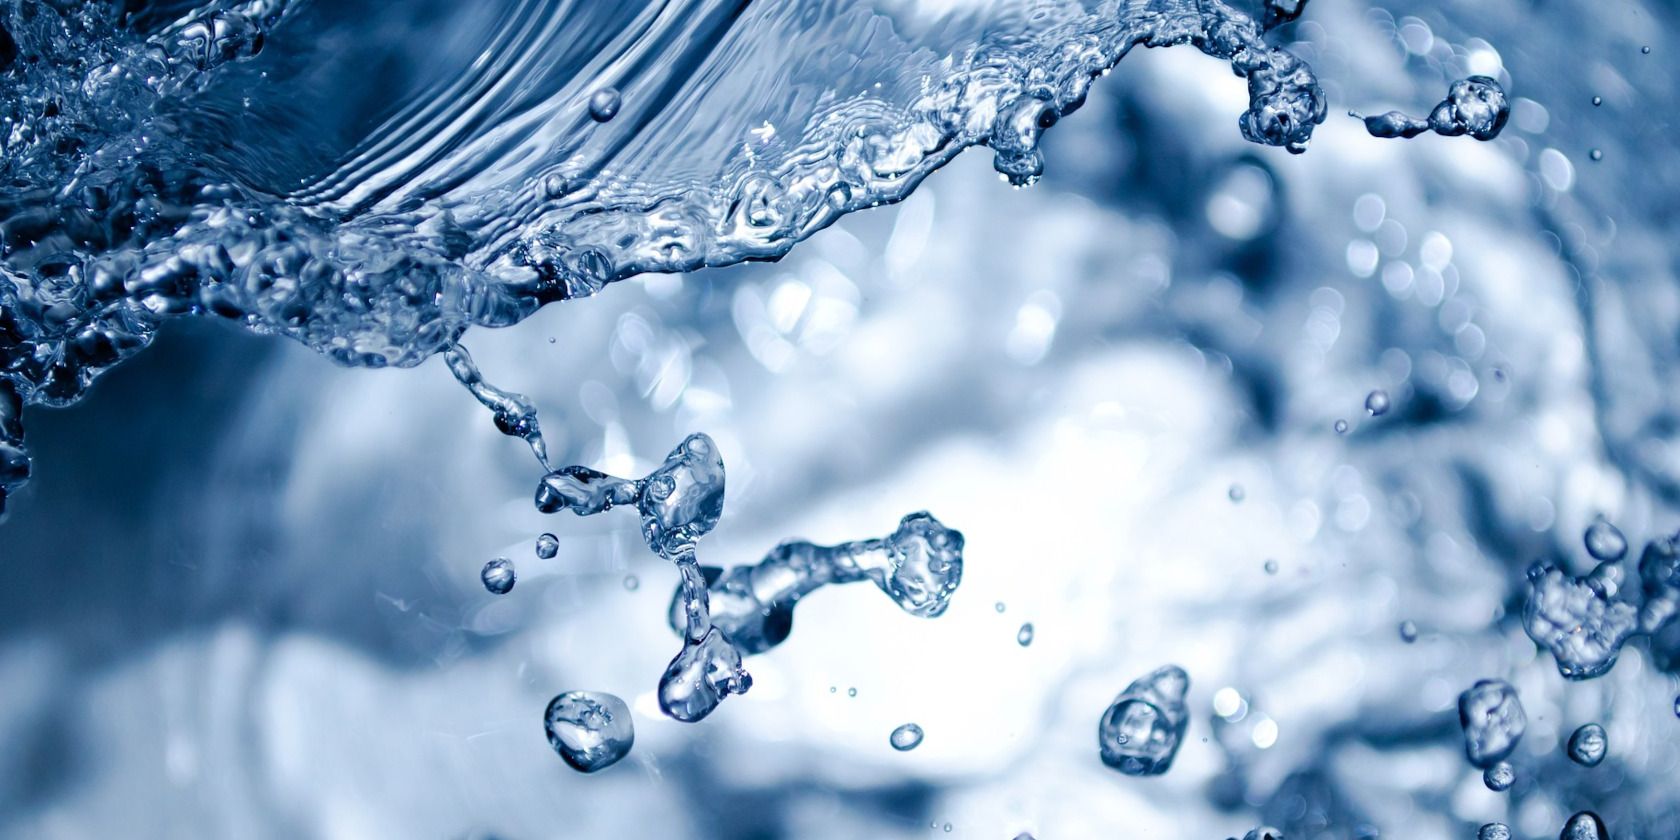 A closeup of a splash of water